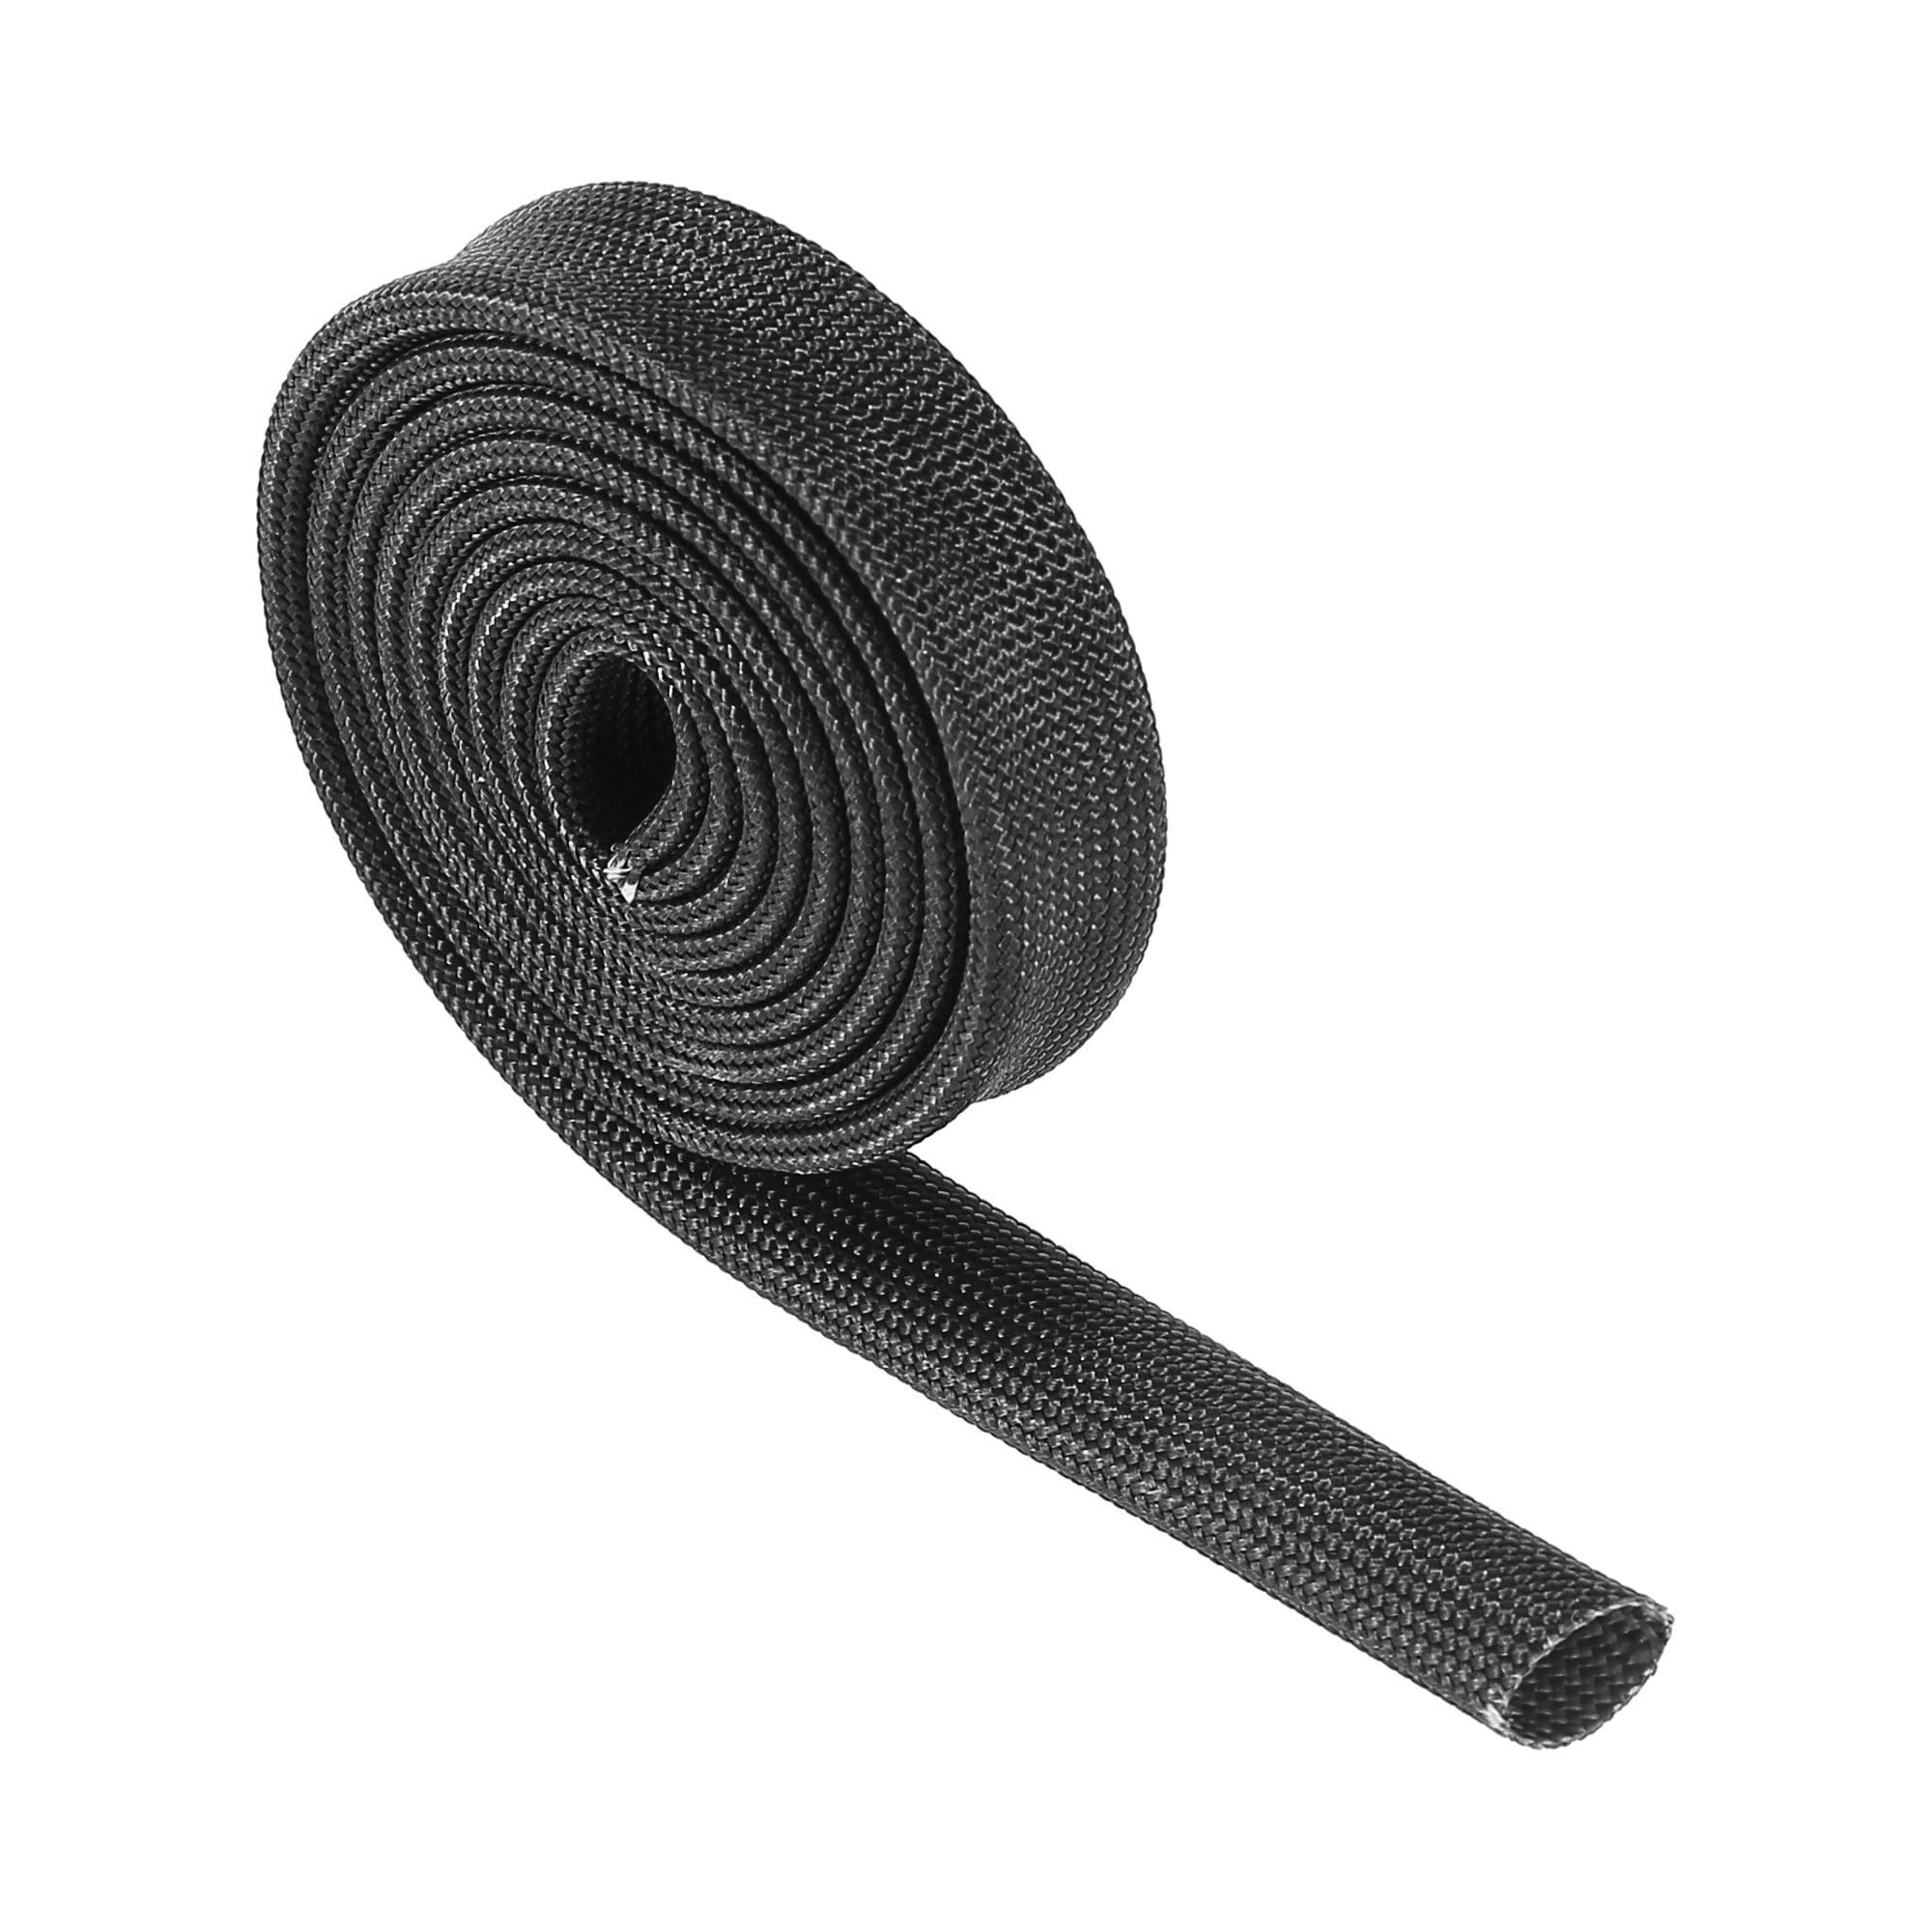 Heat Fiberglass Shield Sleeve Adjustable Hose Heat Spark Plug Wire High Temp Black Colour 16FT-20MM 3/4 for Car Wire Loom Protection 